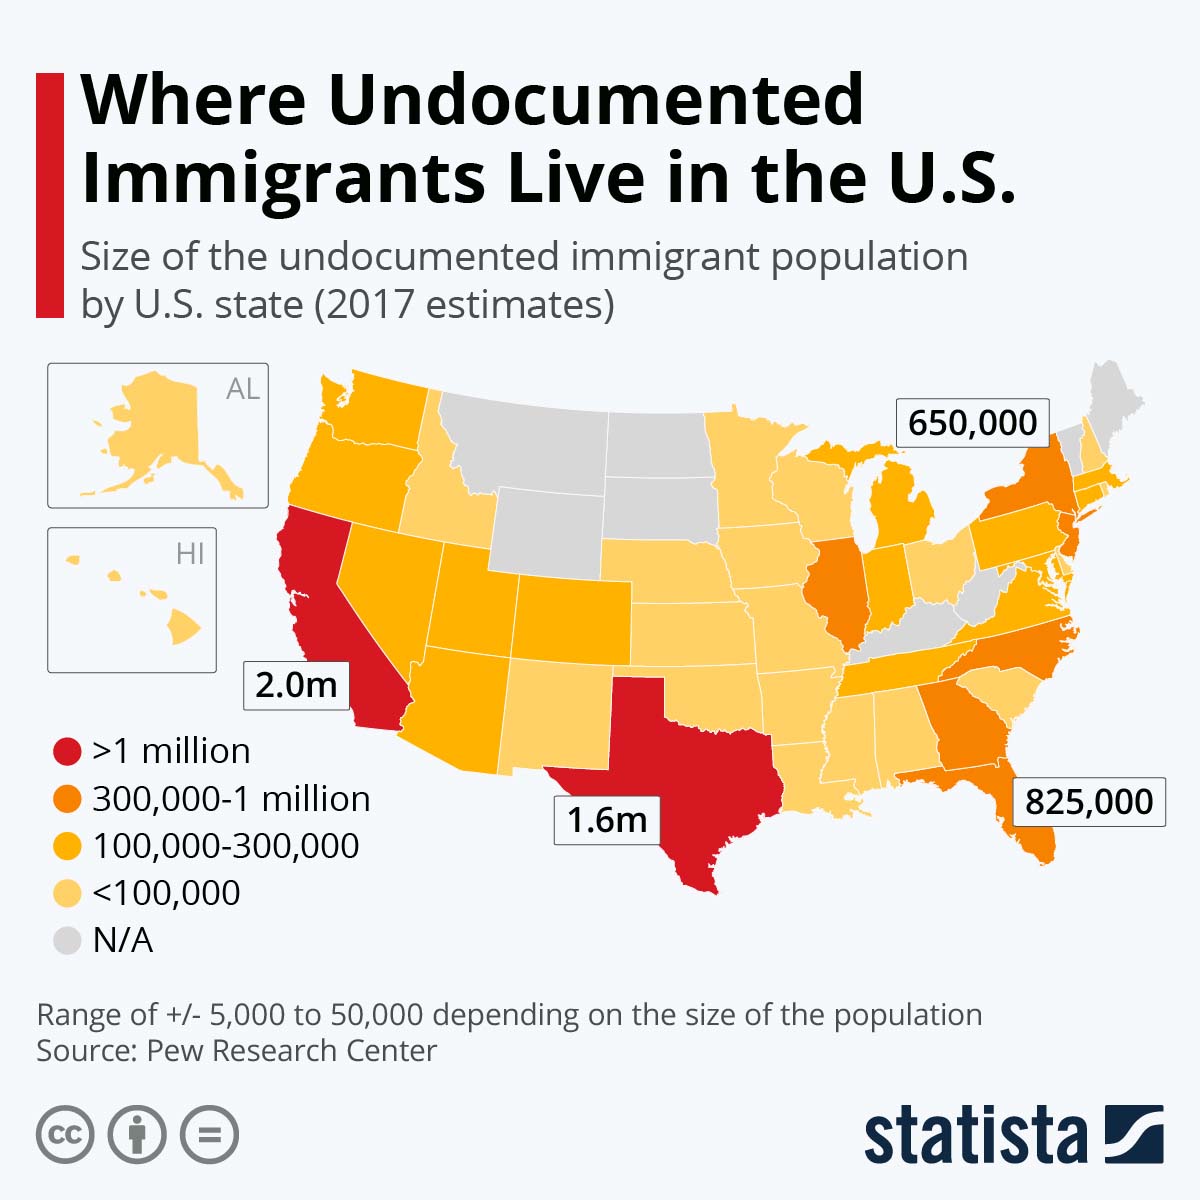 Where Undocumented Immigrants Live in the U.S.